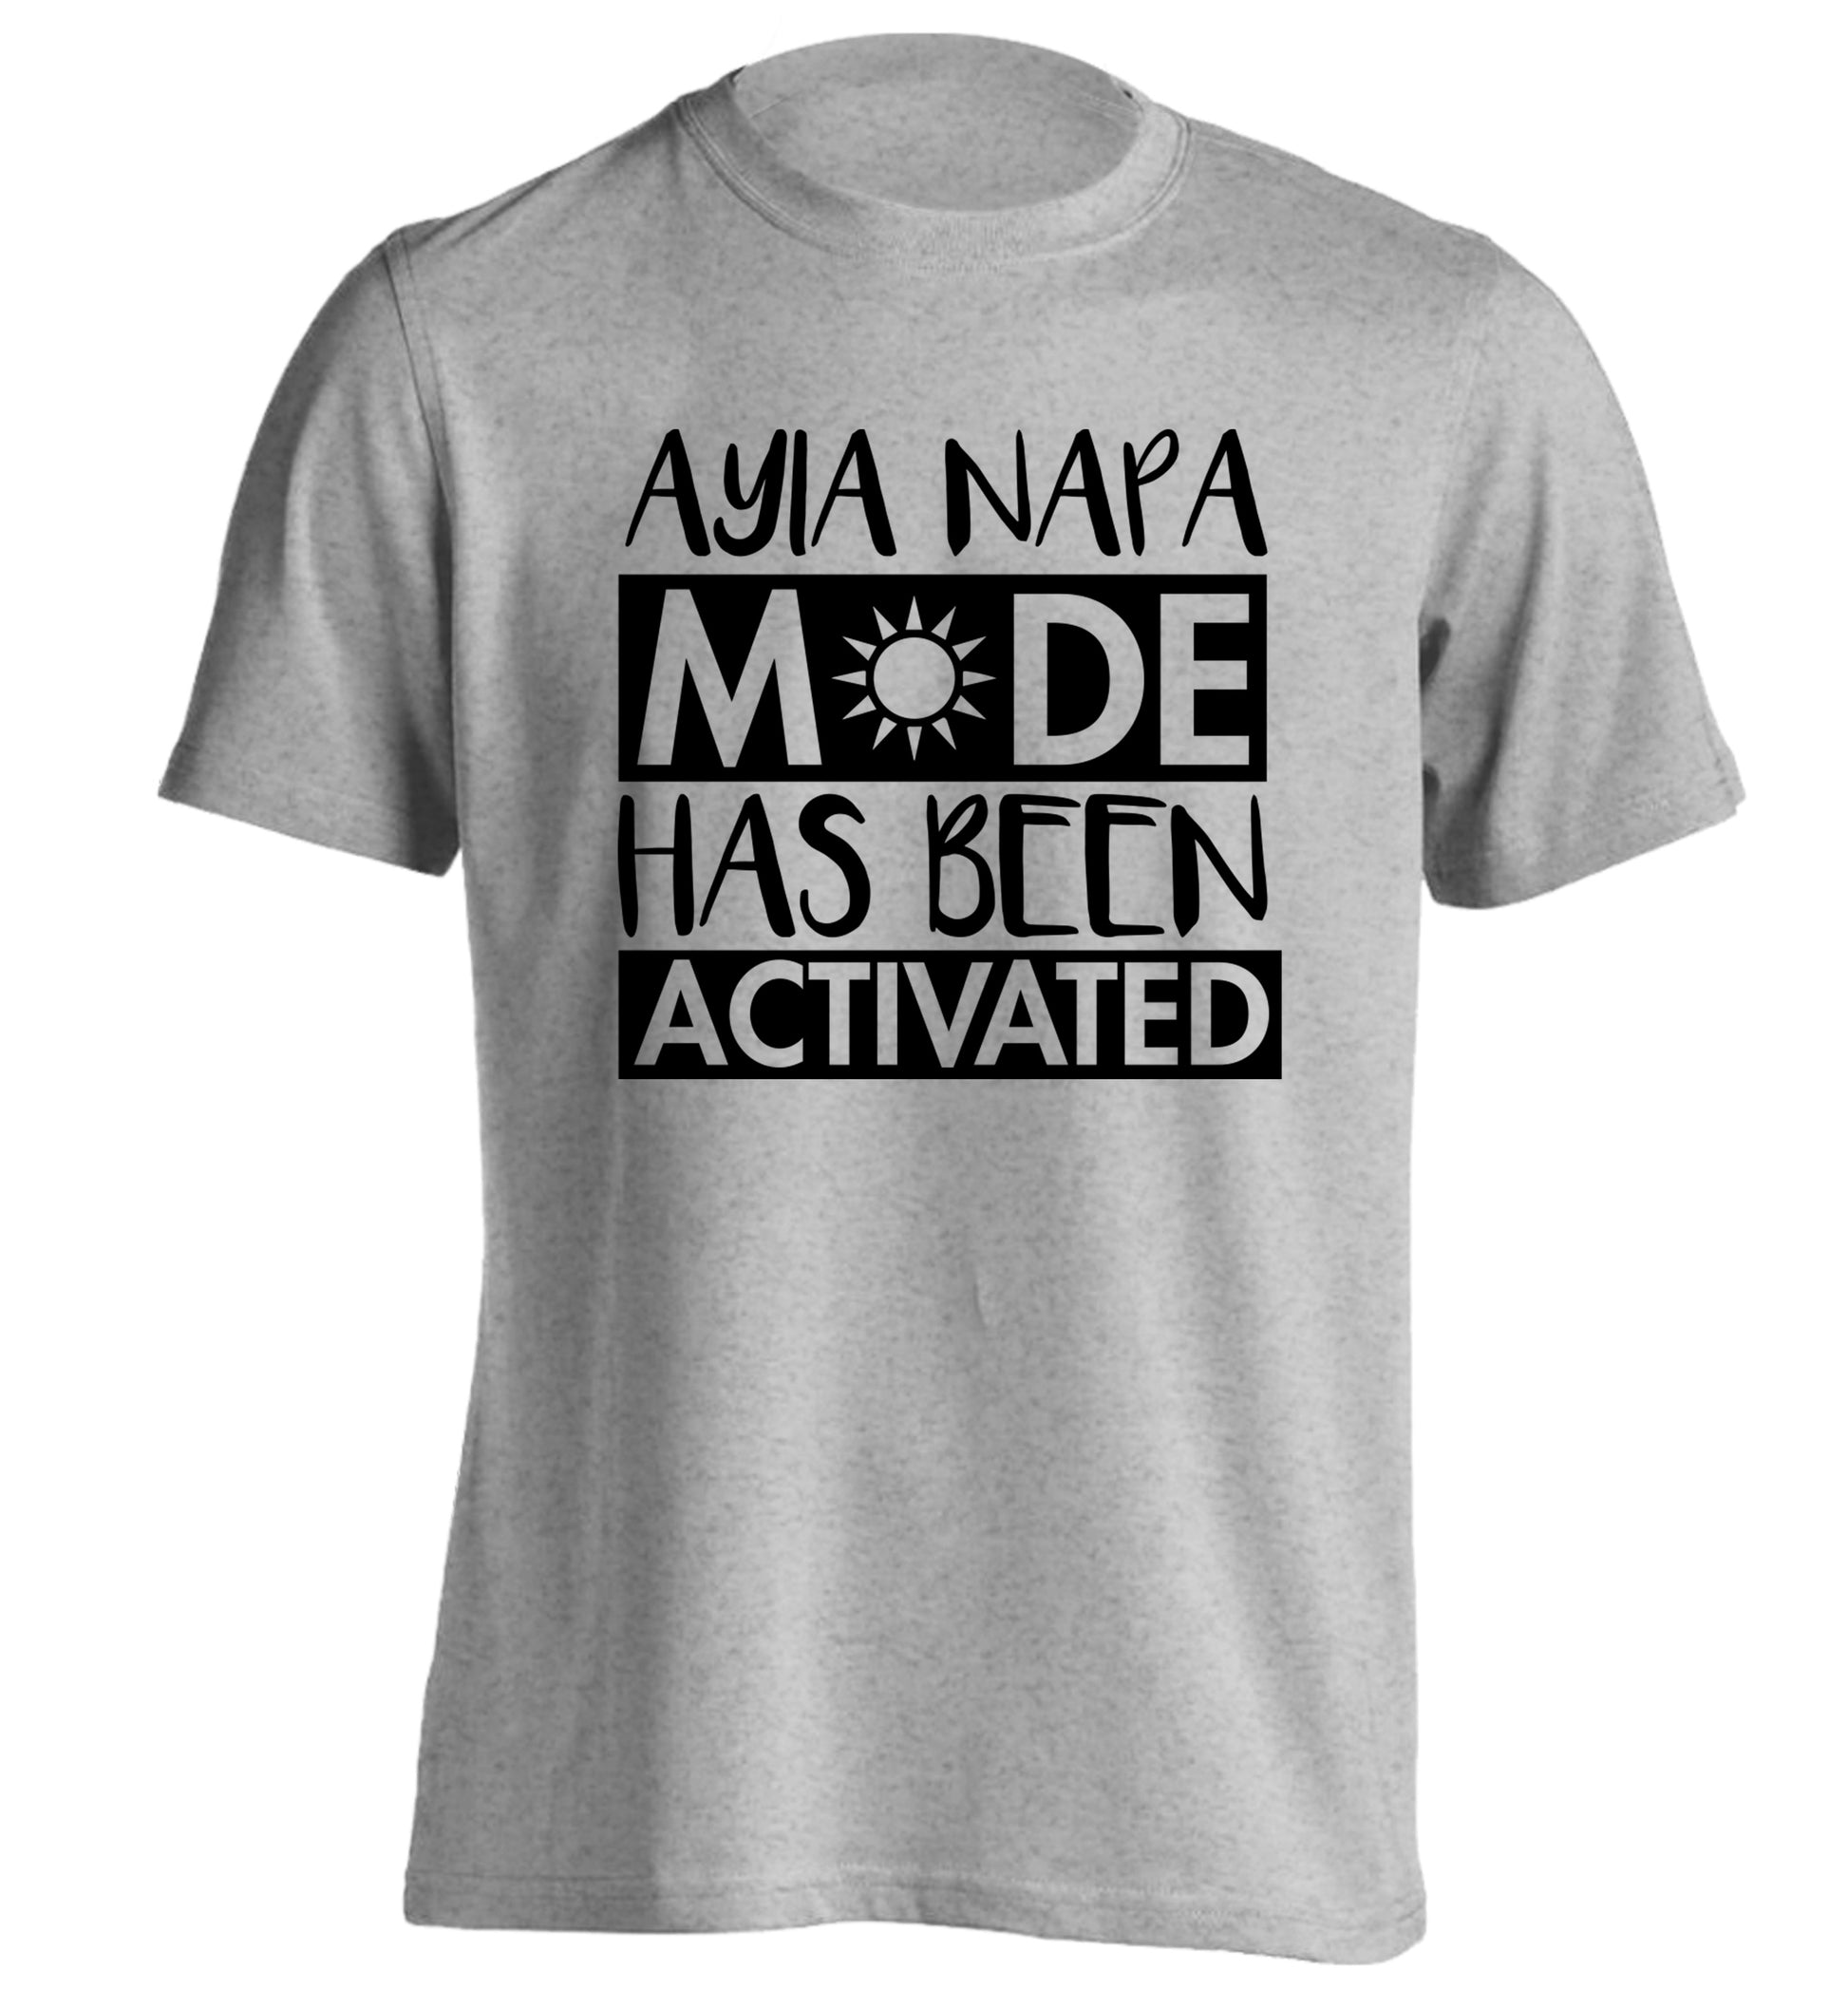 Ayia Napa mode has been activated adults unisex grey Tshirt 2XL